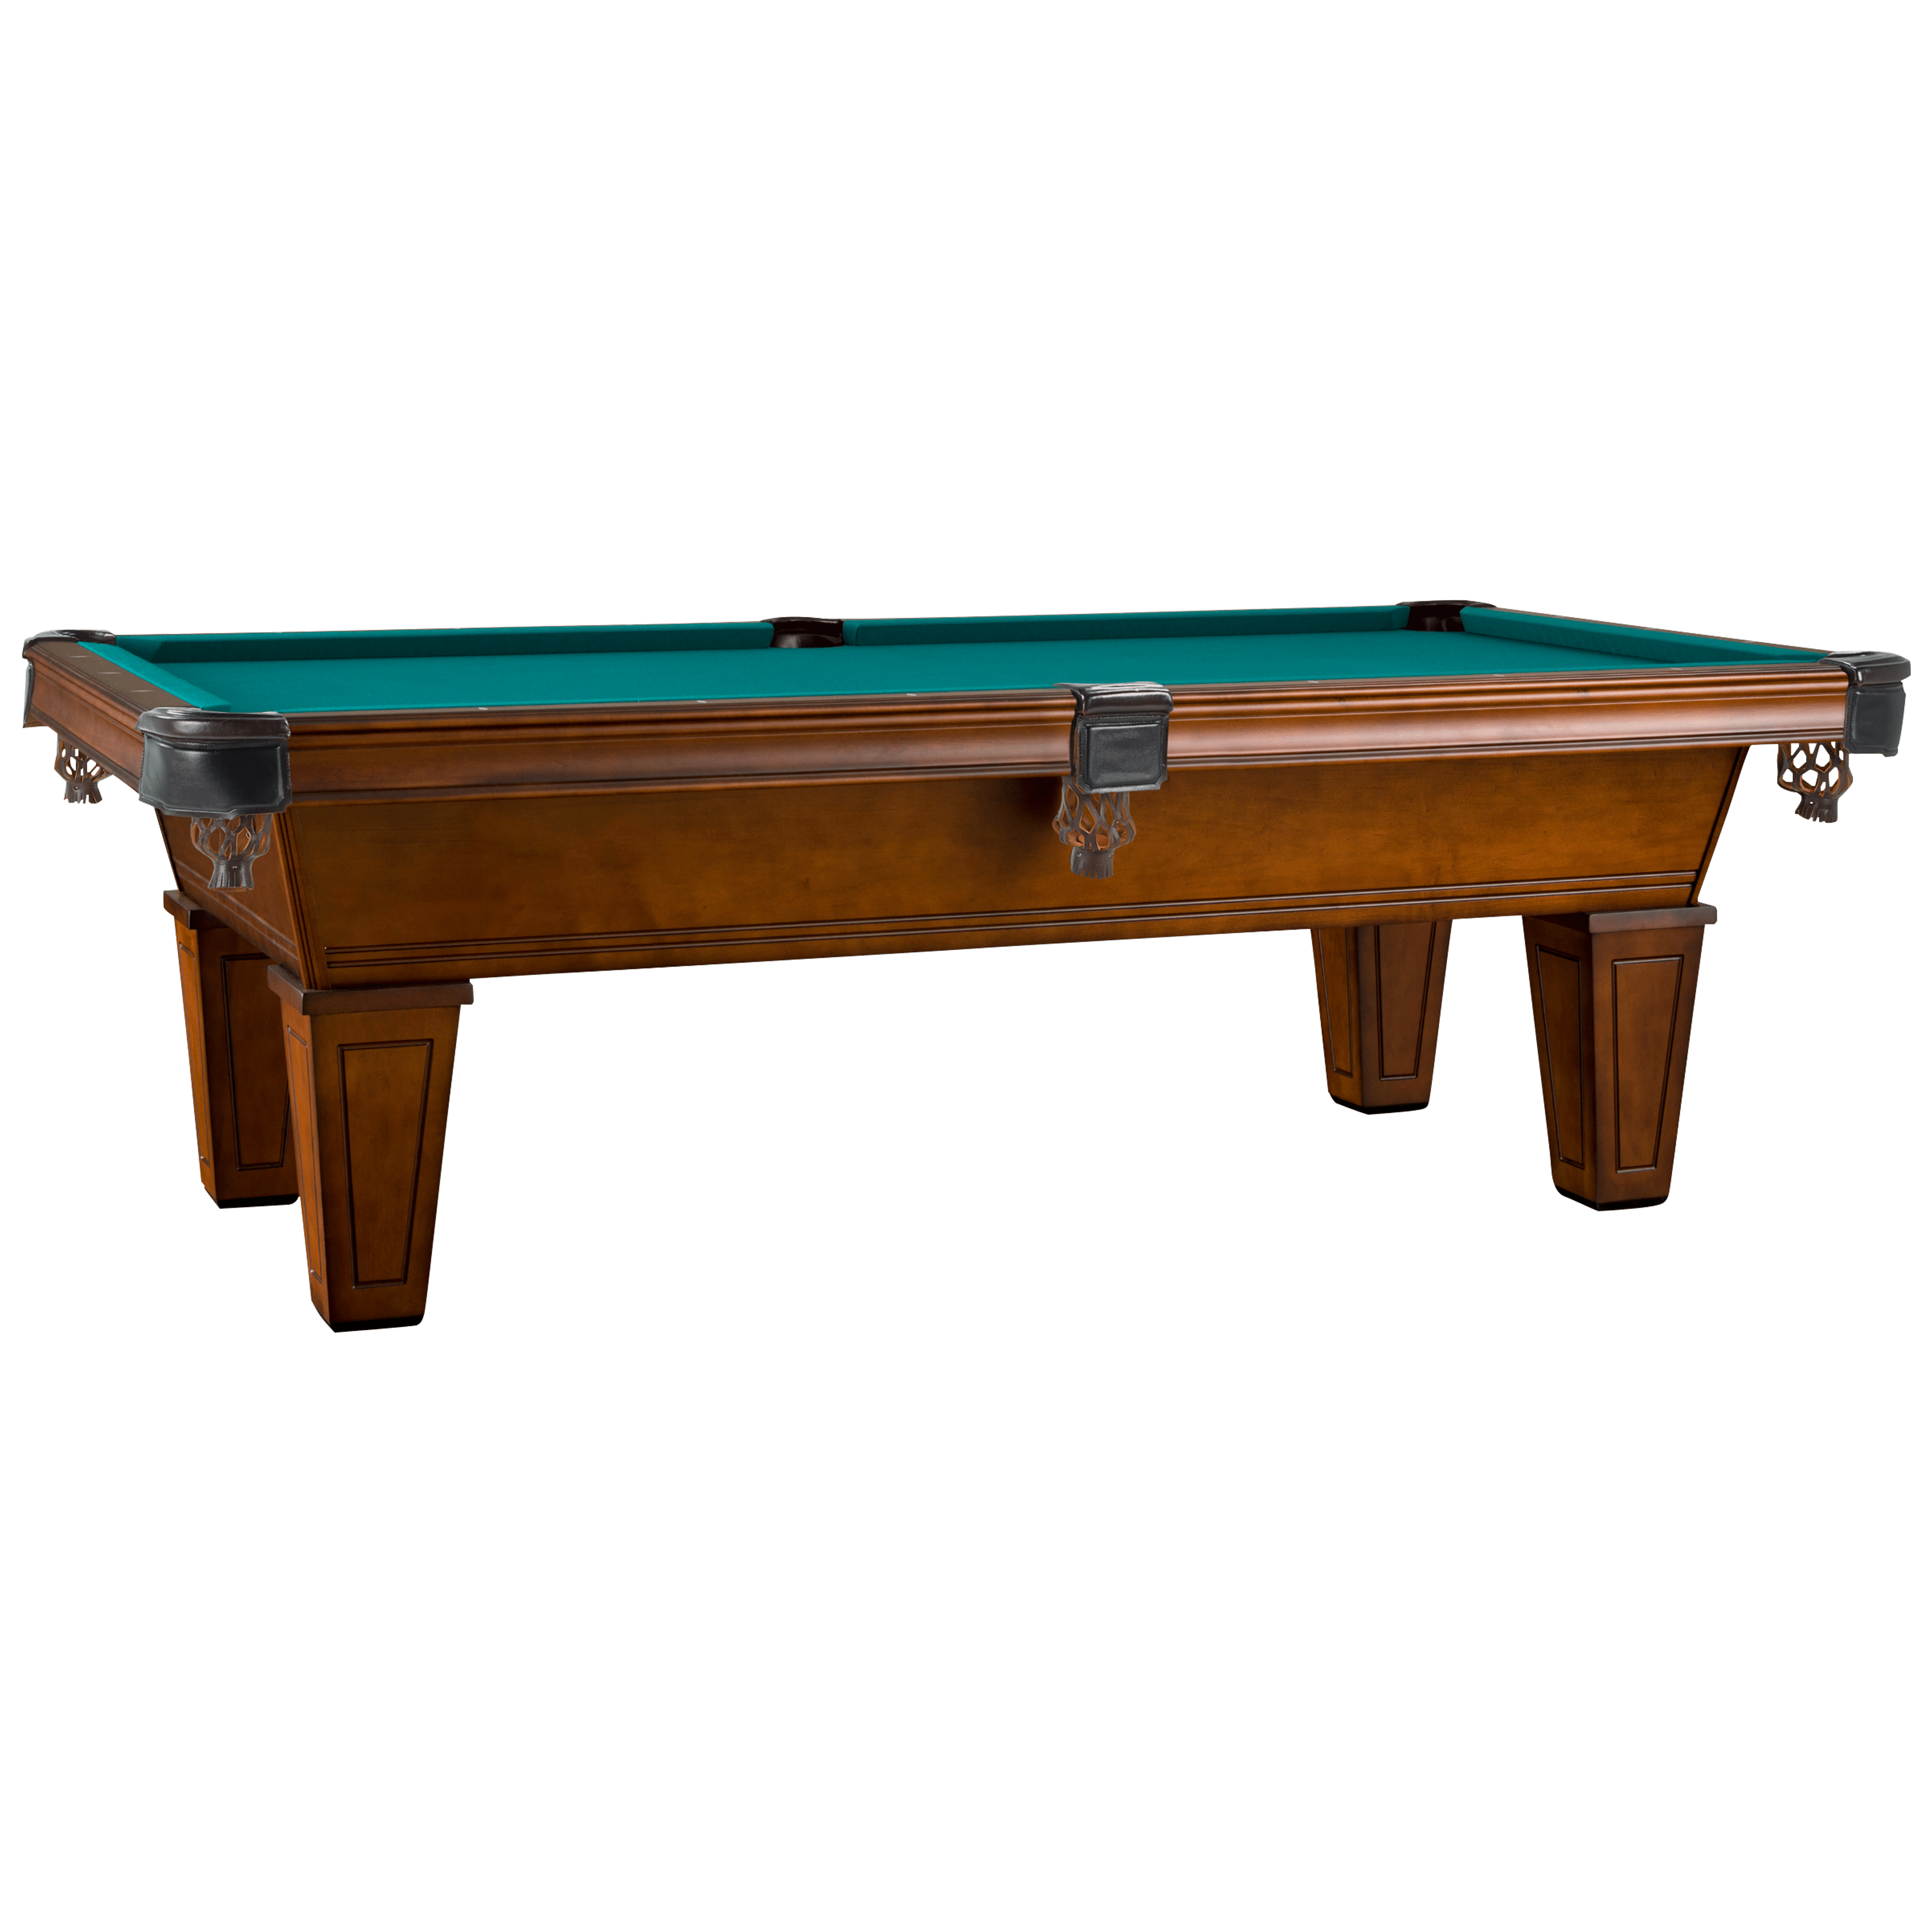 American Heritage Avon Pool Table (Suede)